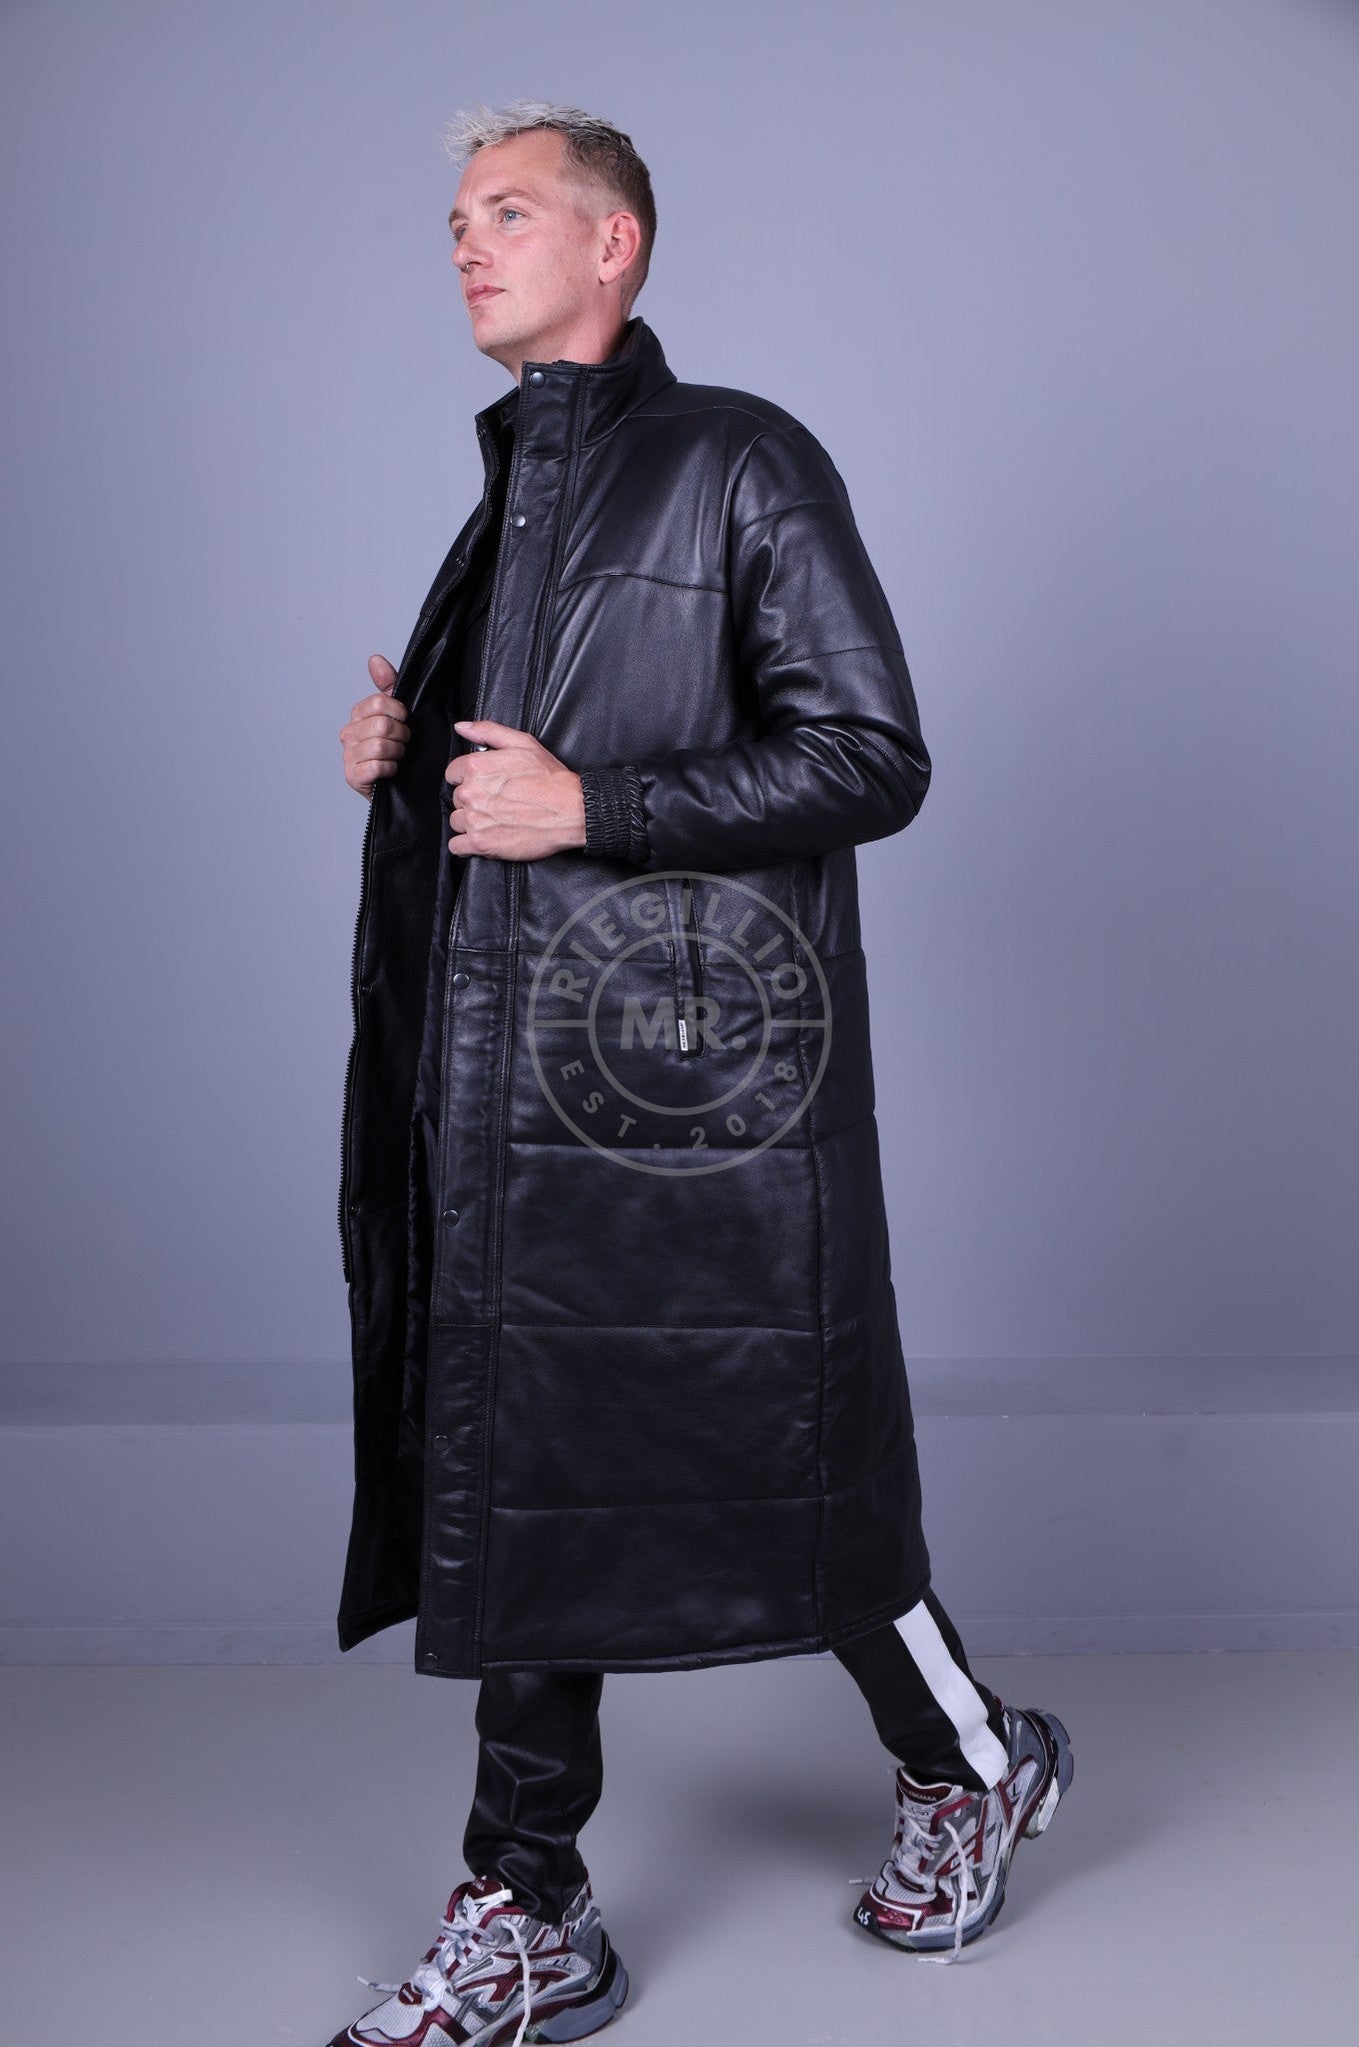 Black Leather Long Winterjacket at MR. Riegillio